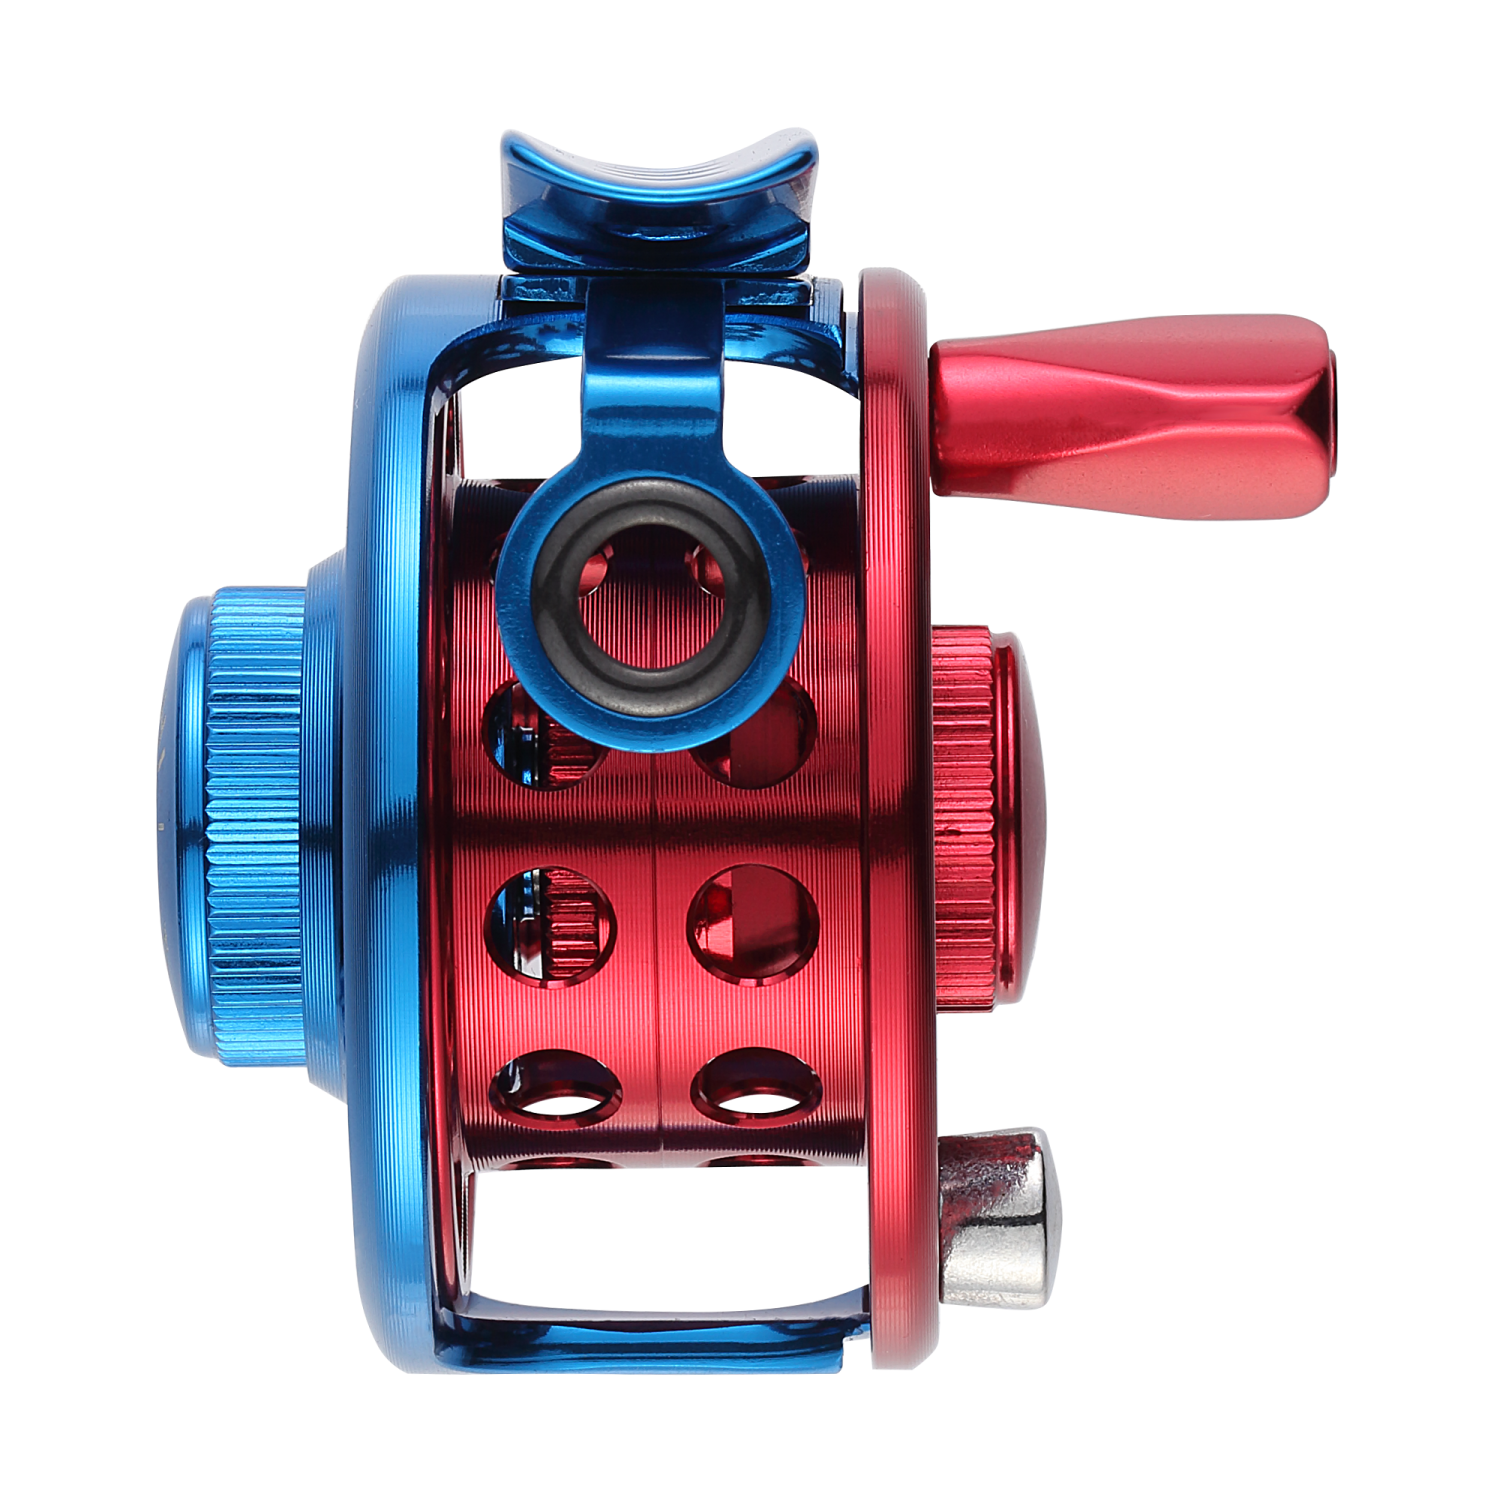 Катушка инерционная Higashi H-70 Blue/Red катушка для рыбалки инерционная higashi h 70 blue red